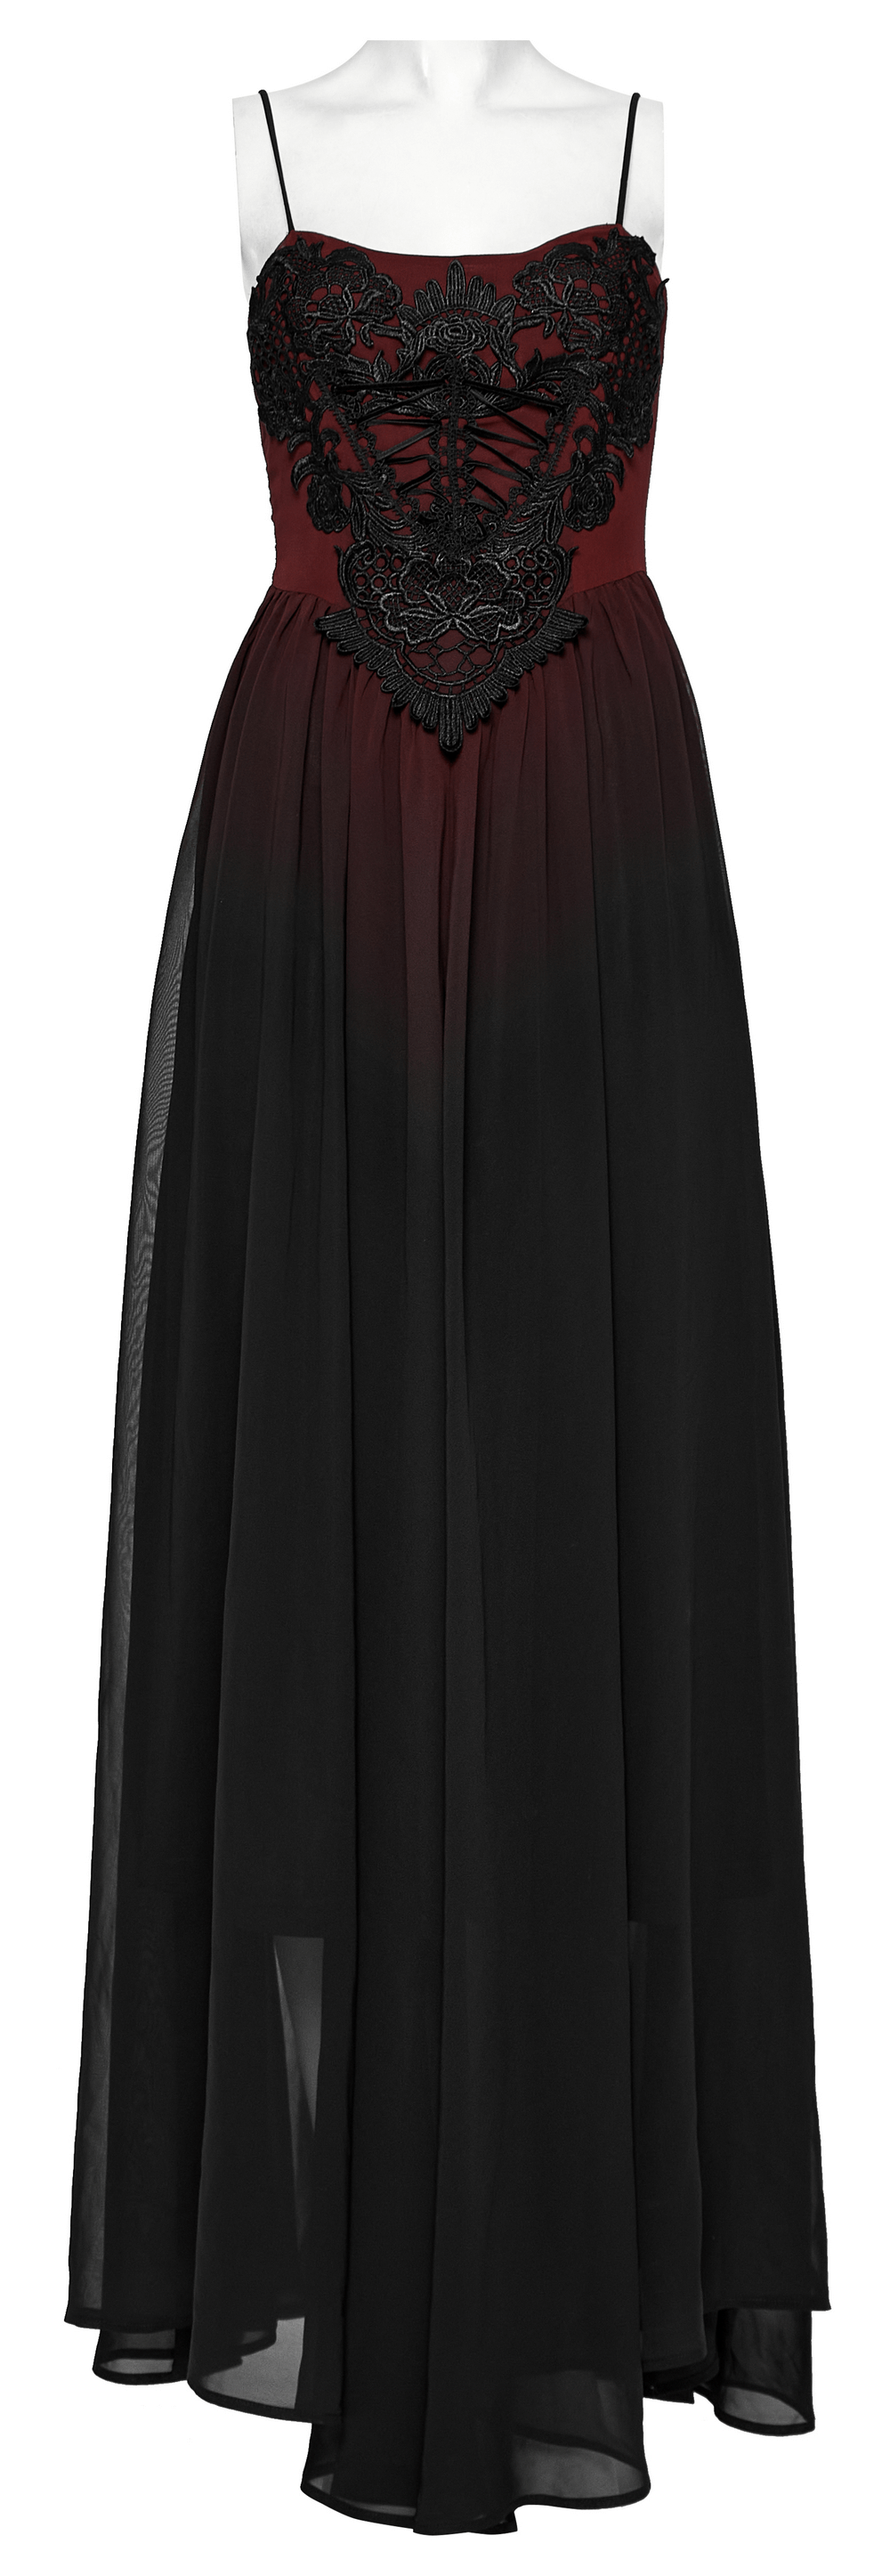 Sleek Gothic Long Dress with Adjustable Straps